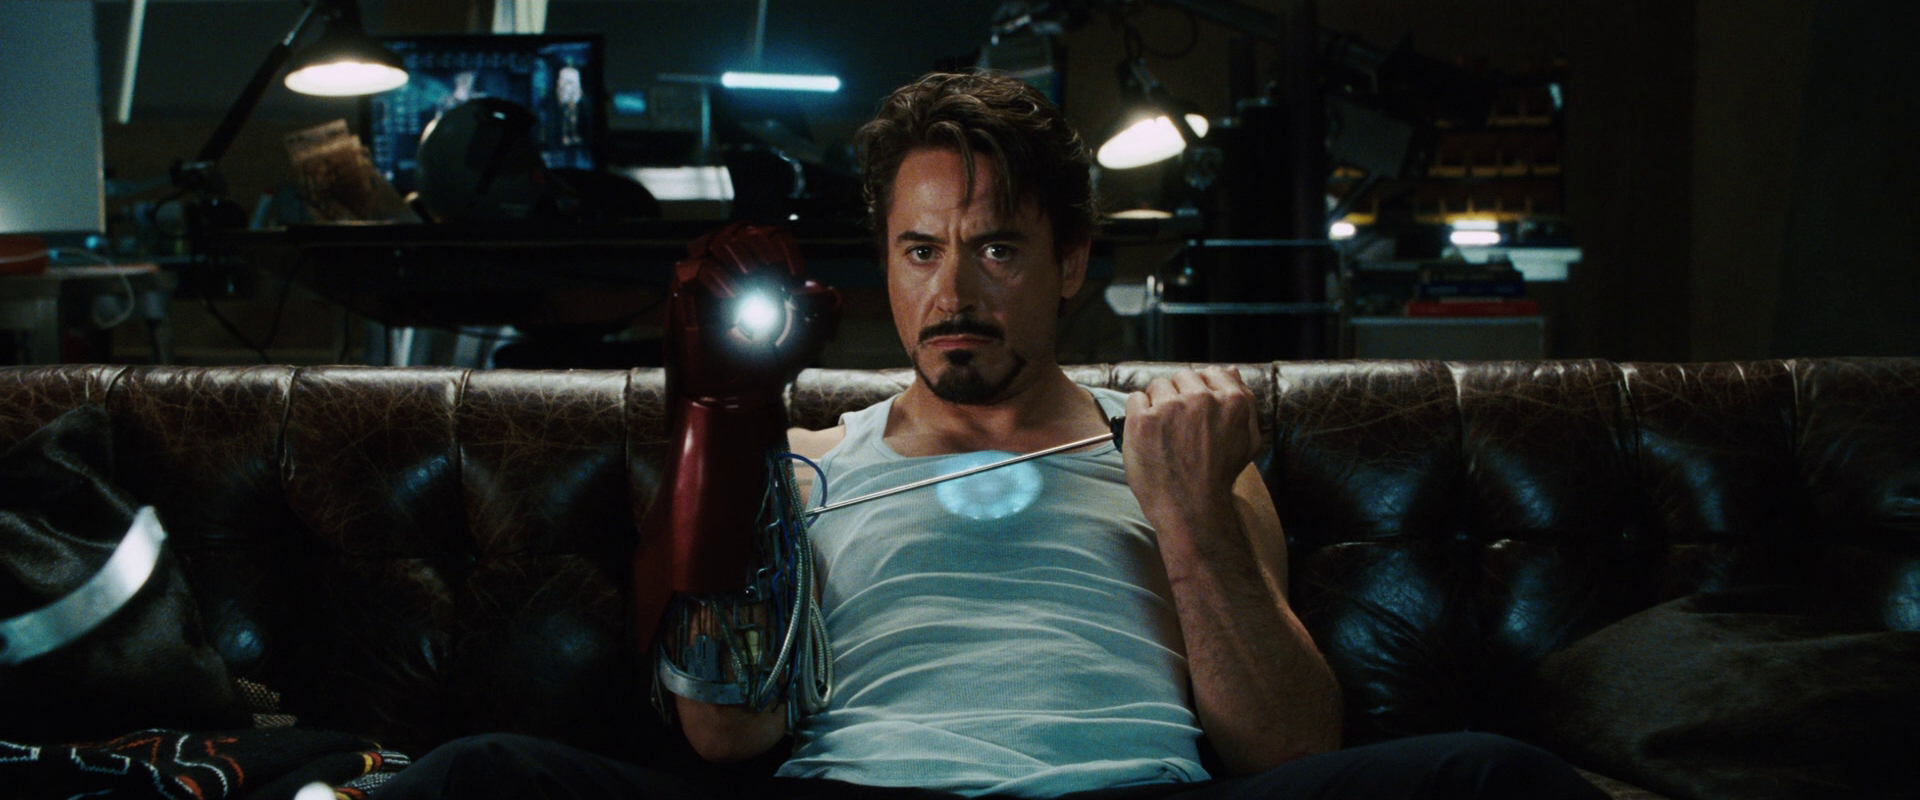 Iron-man-movie-tony-stark-on-couch-photo_(1).jpg